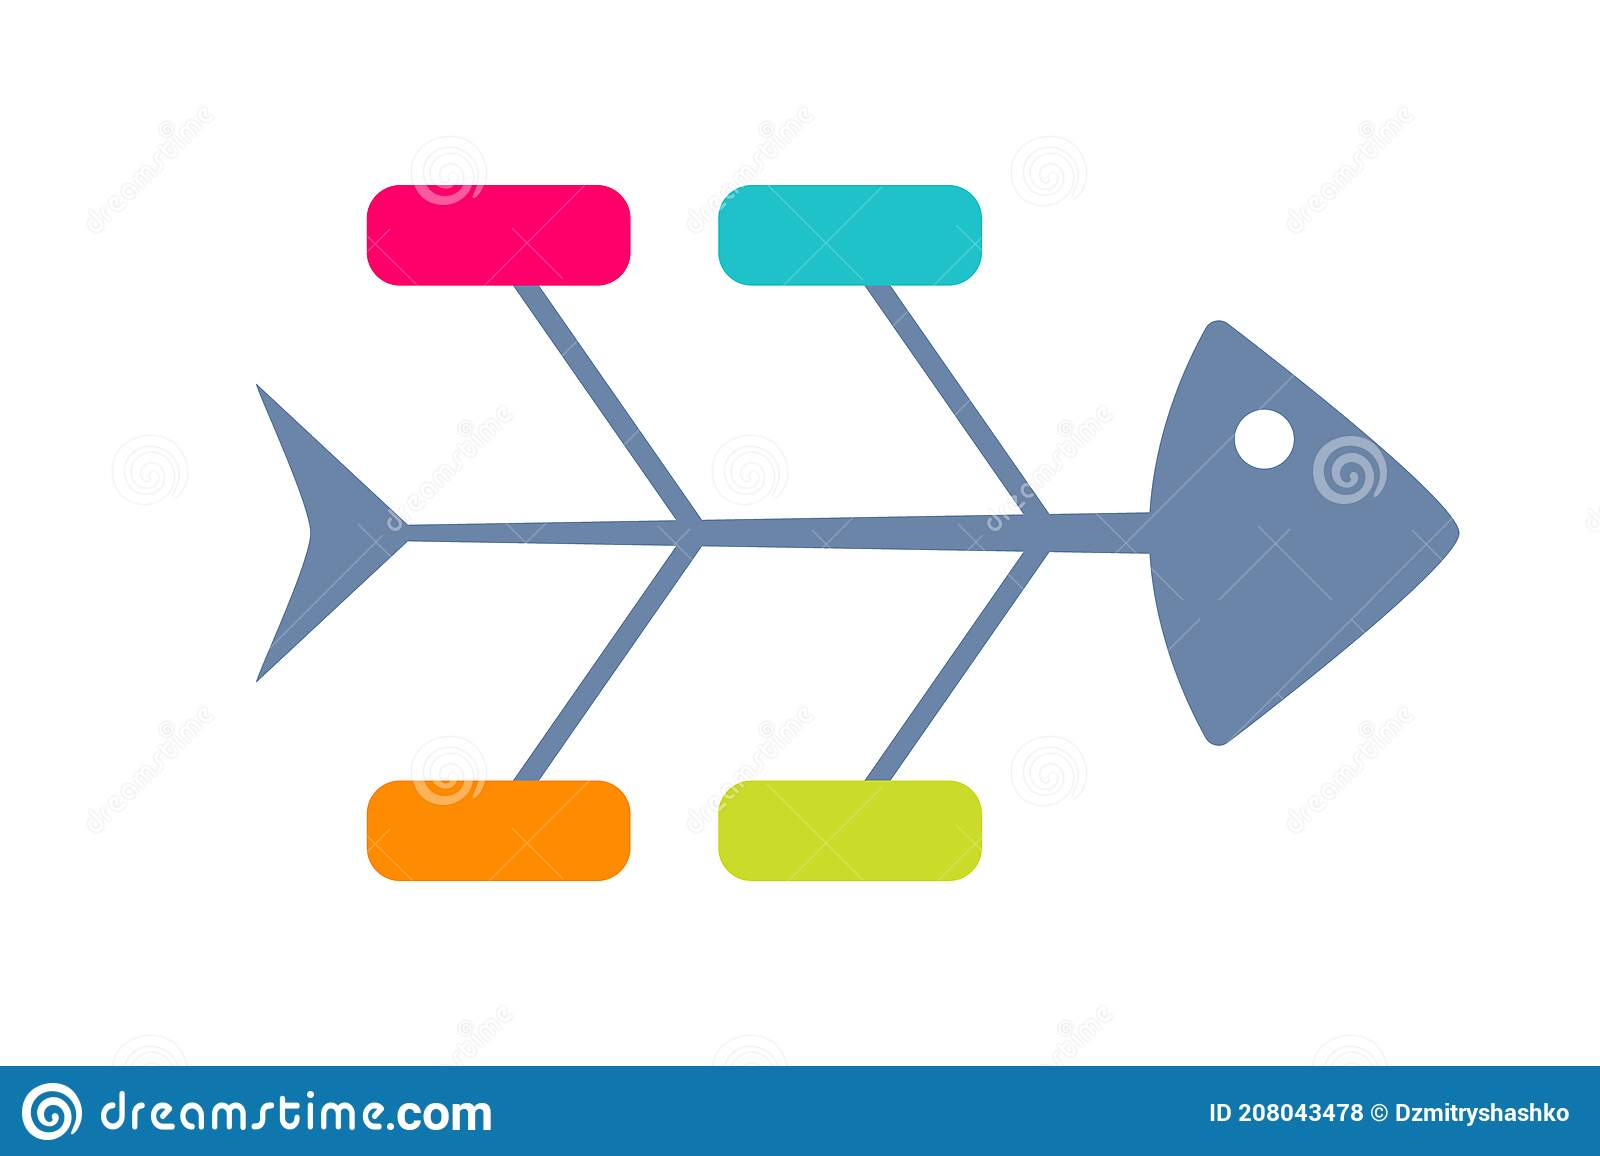 Fishbone Diagram Stock Illustrations – 10 Fishbone Diagram Stock